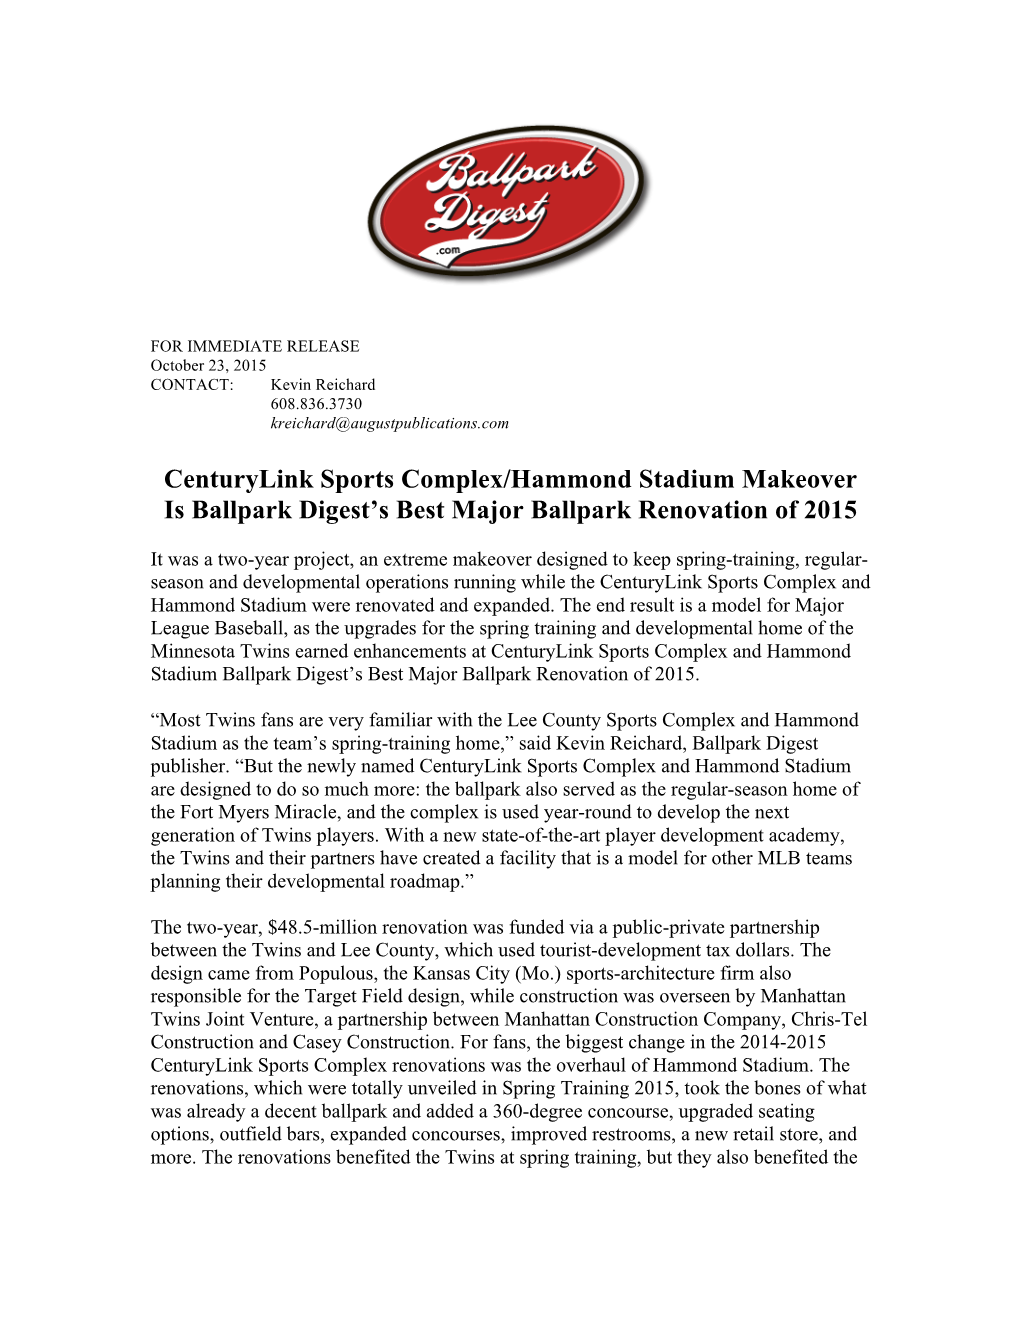 Centurylink Sports Complex/Hammond Stadium Makeover Is Ballpark Digest’S Best Major Ballpark Renovation of 2015